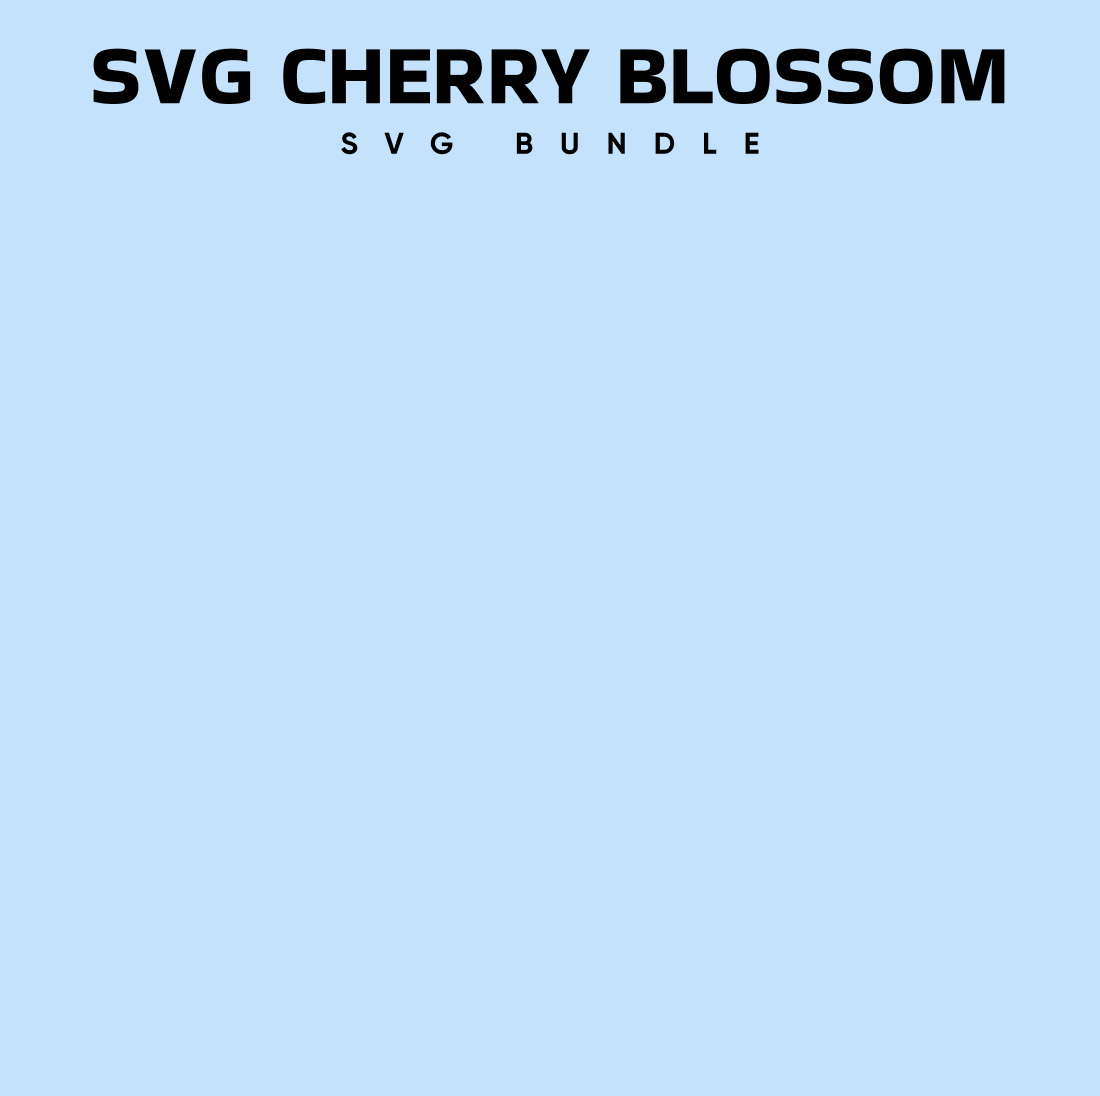 Cherry blossom svg bundle 1100x1100.